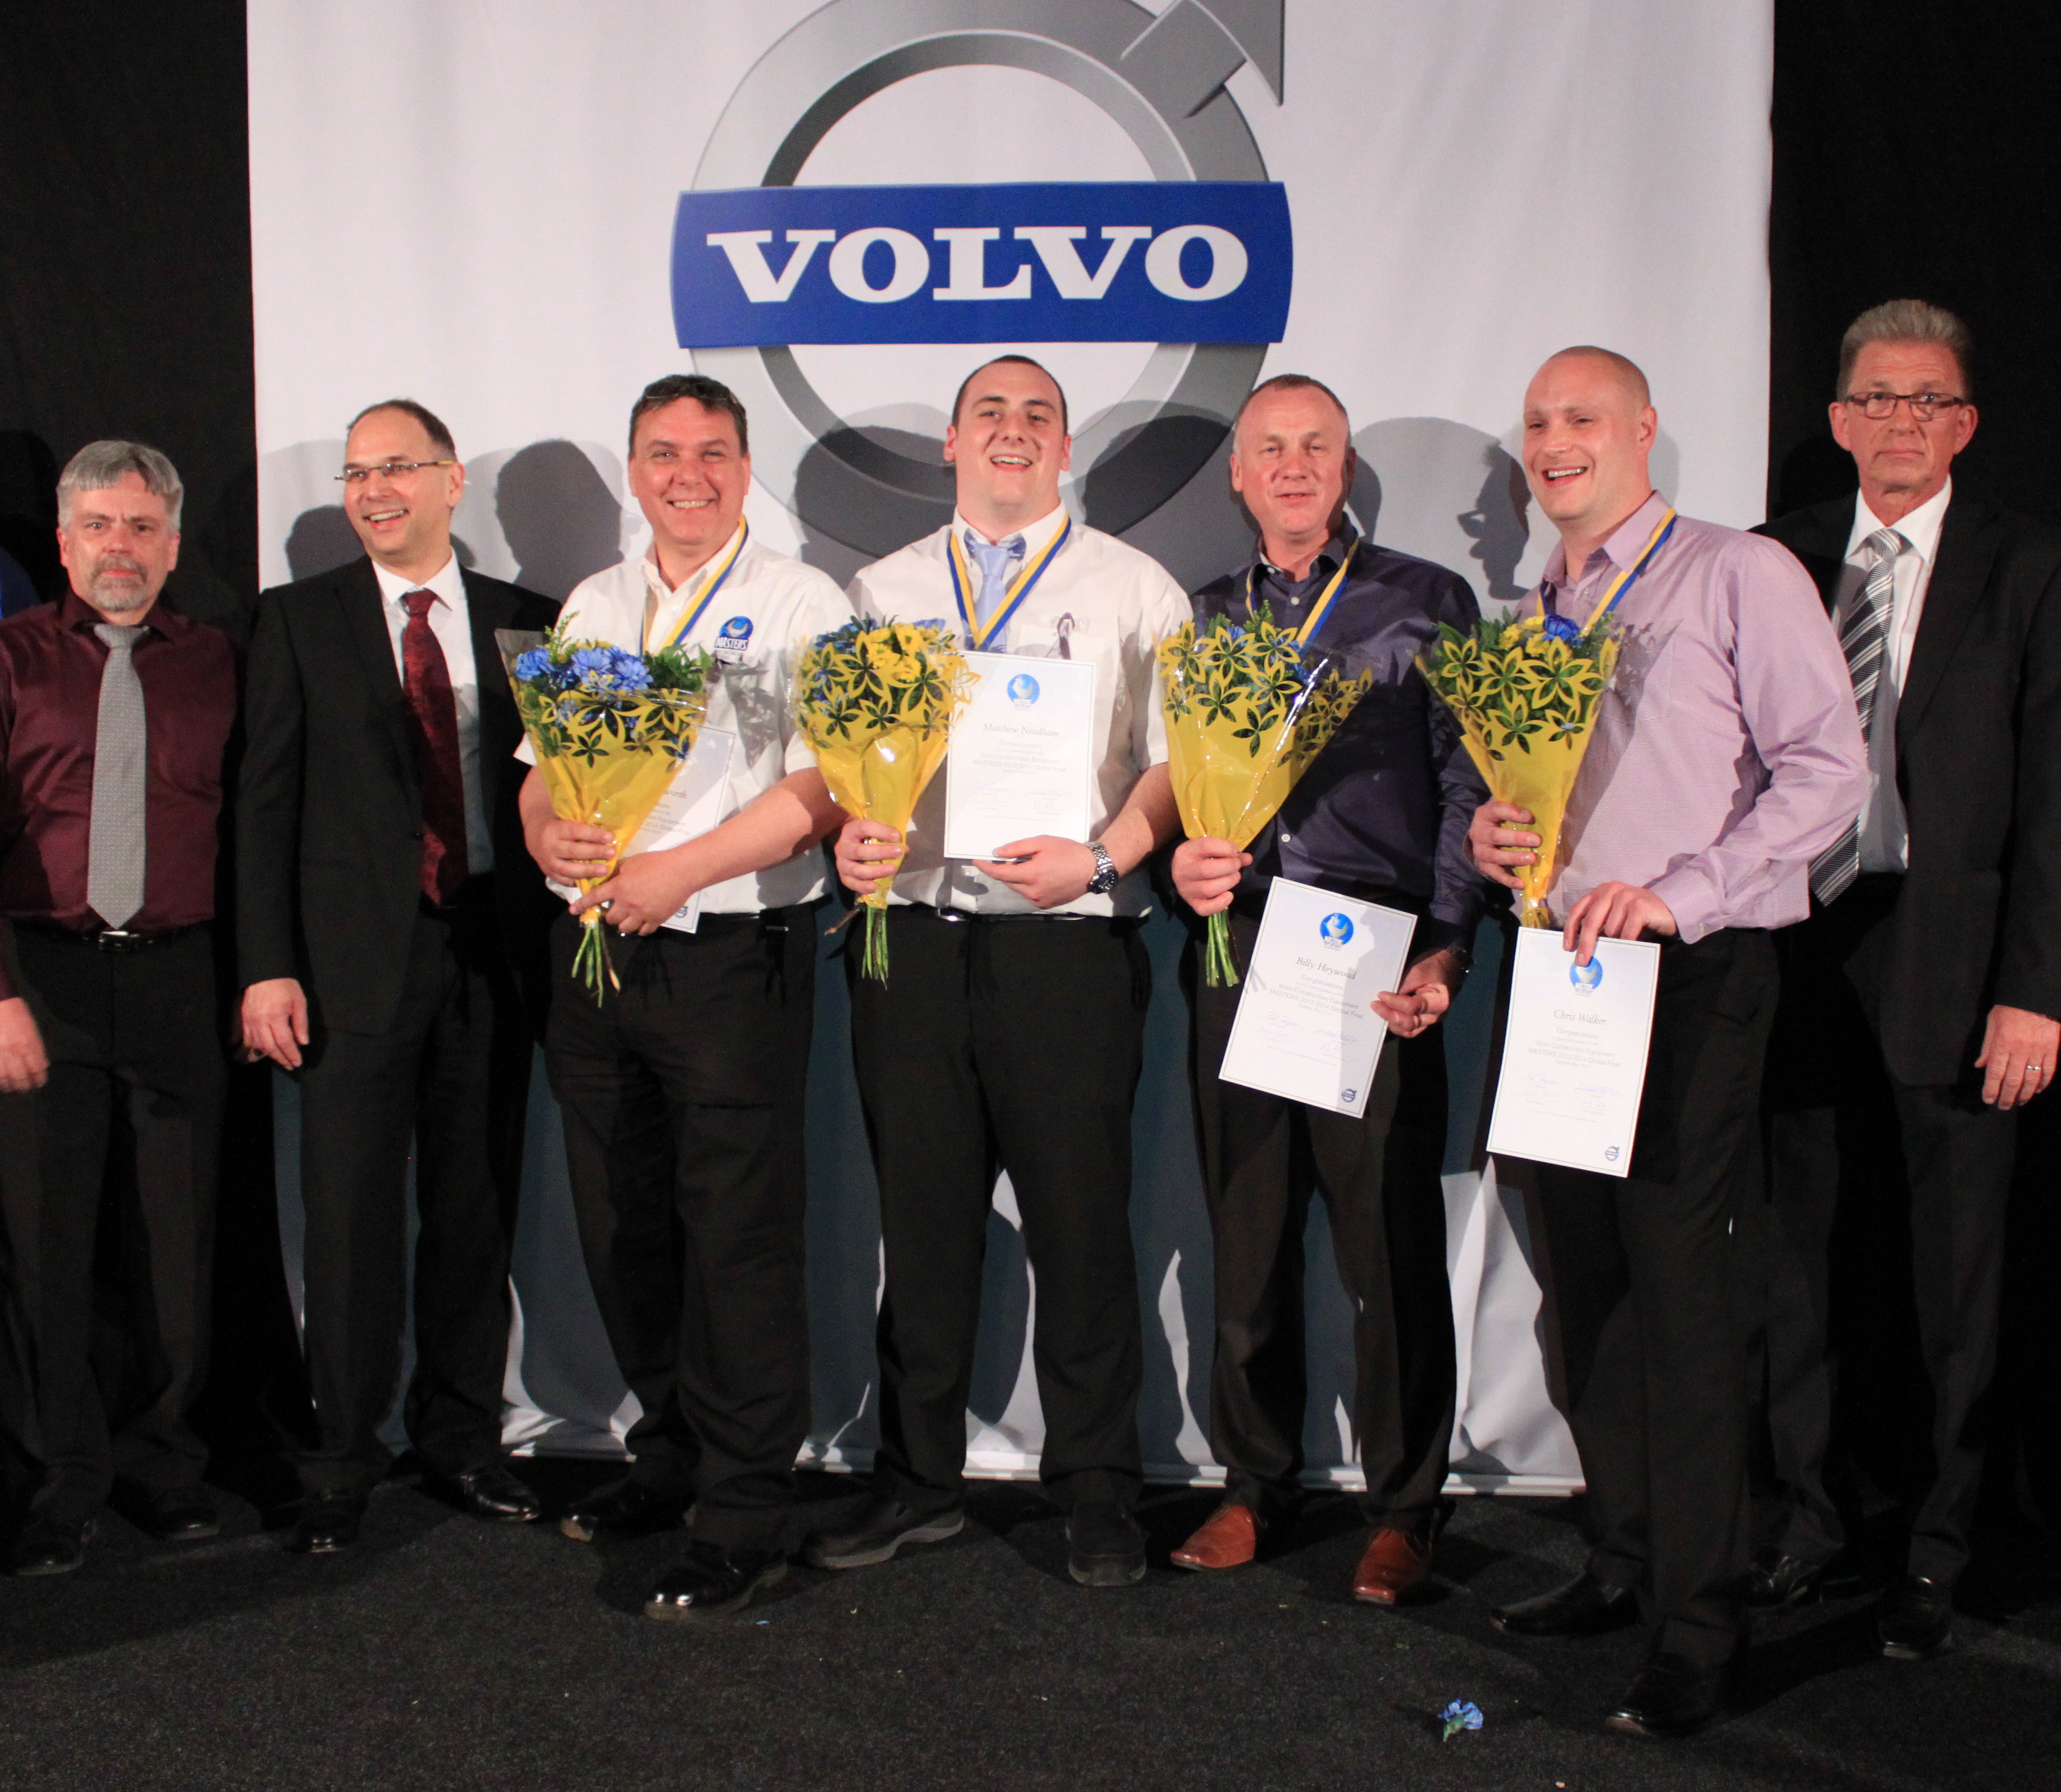 The winning Volvo Masters 2014 GB team